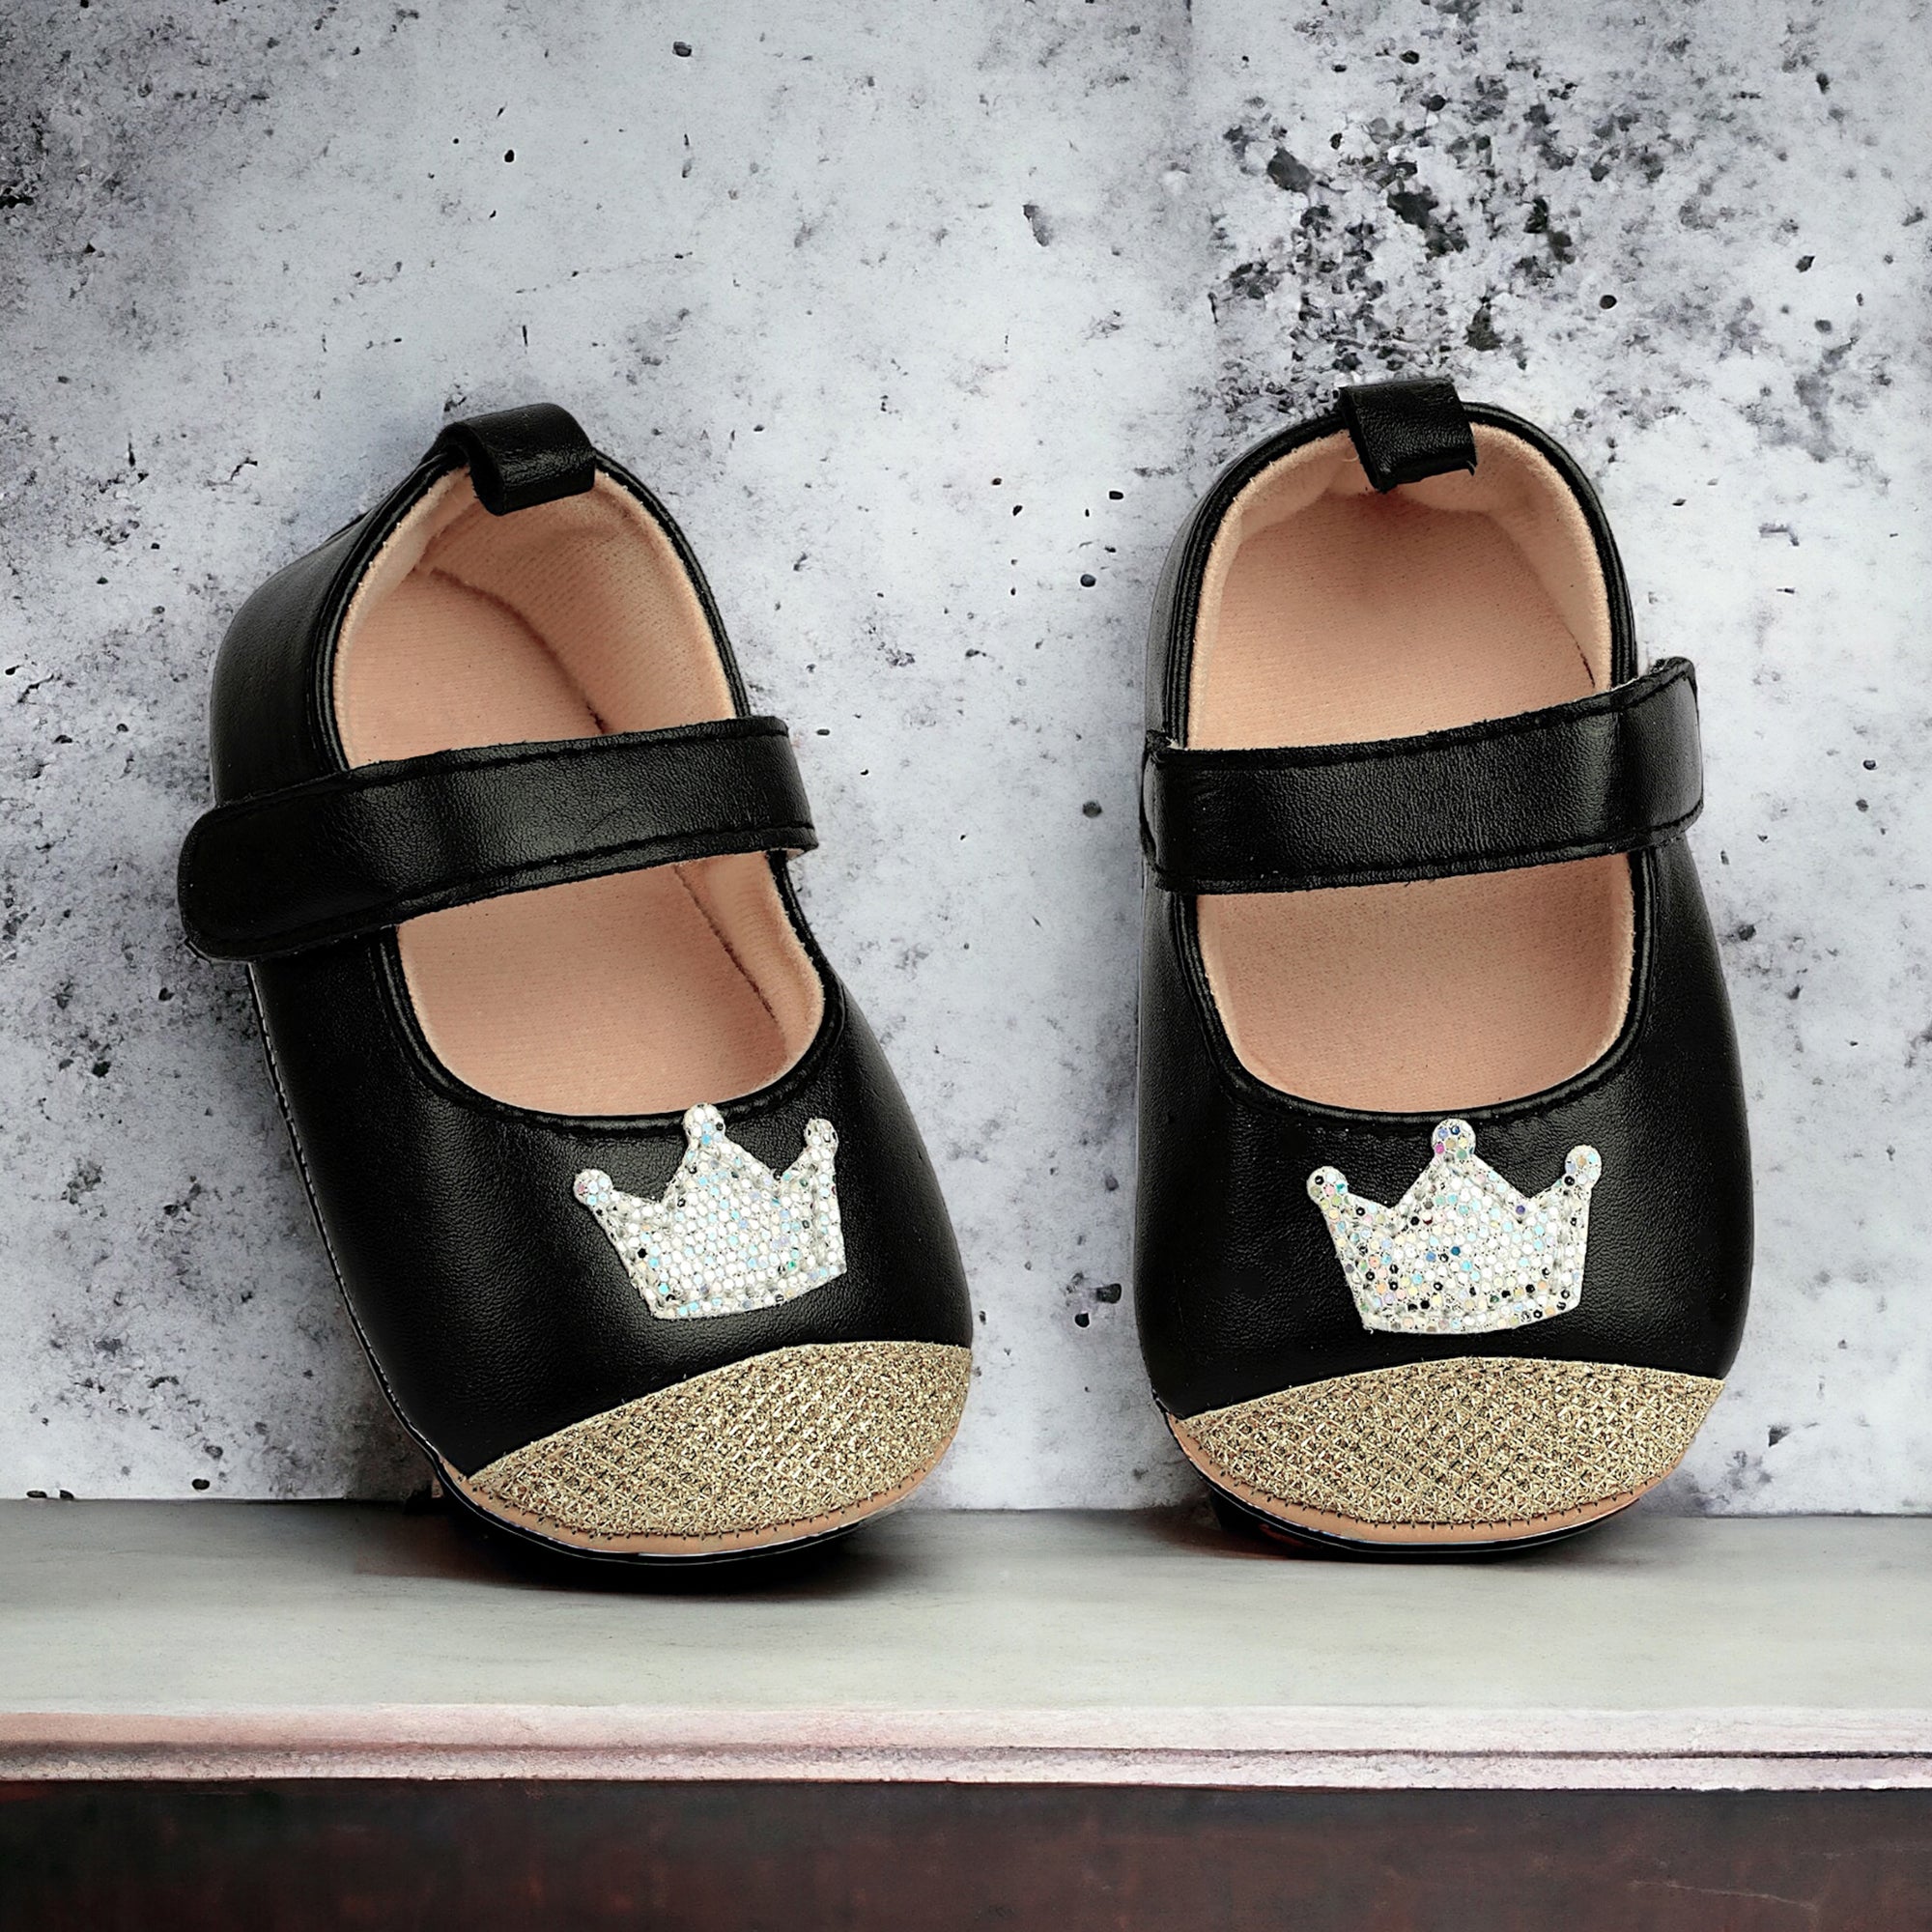 Baby Moo Crown Sequin Partywear Anti-Skid Ballerina Booties - Black